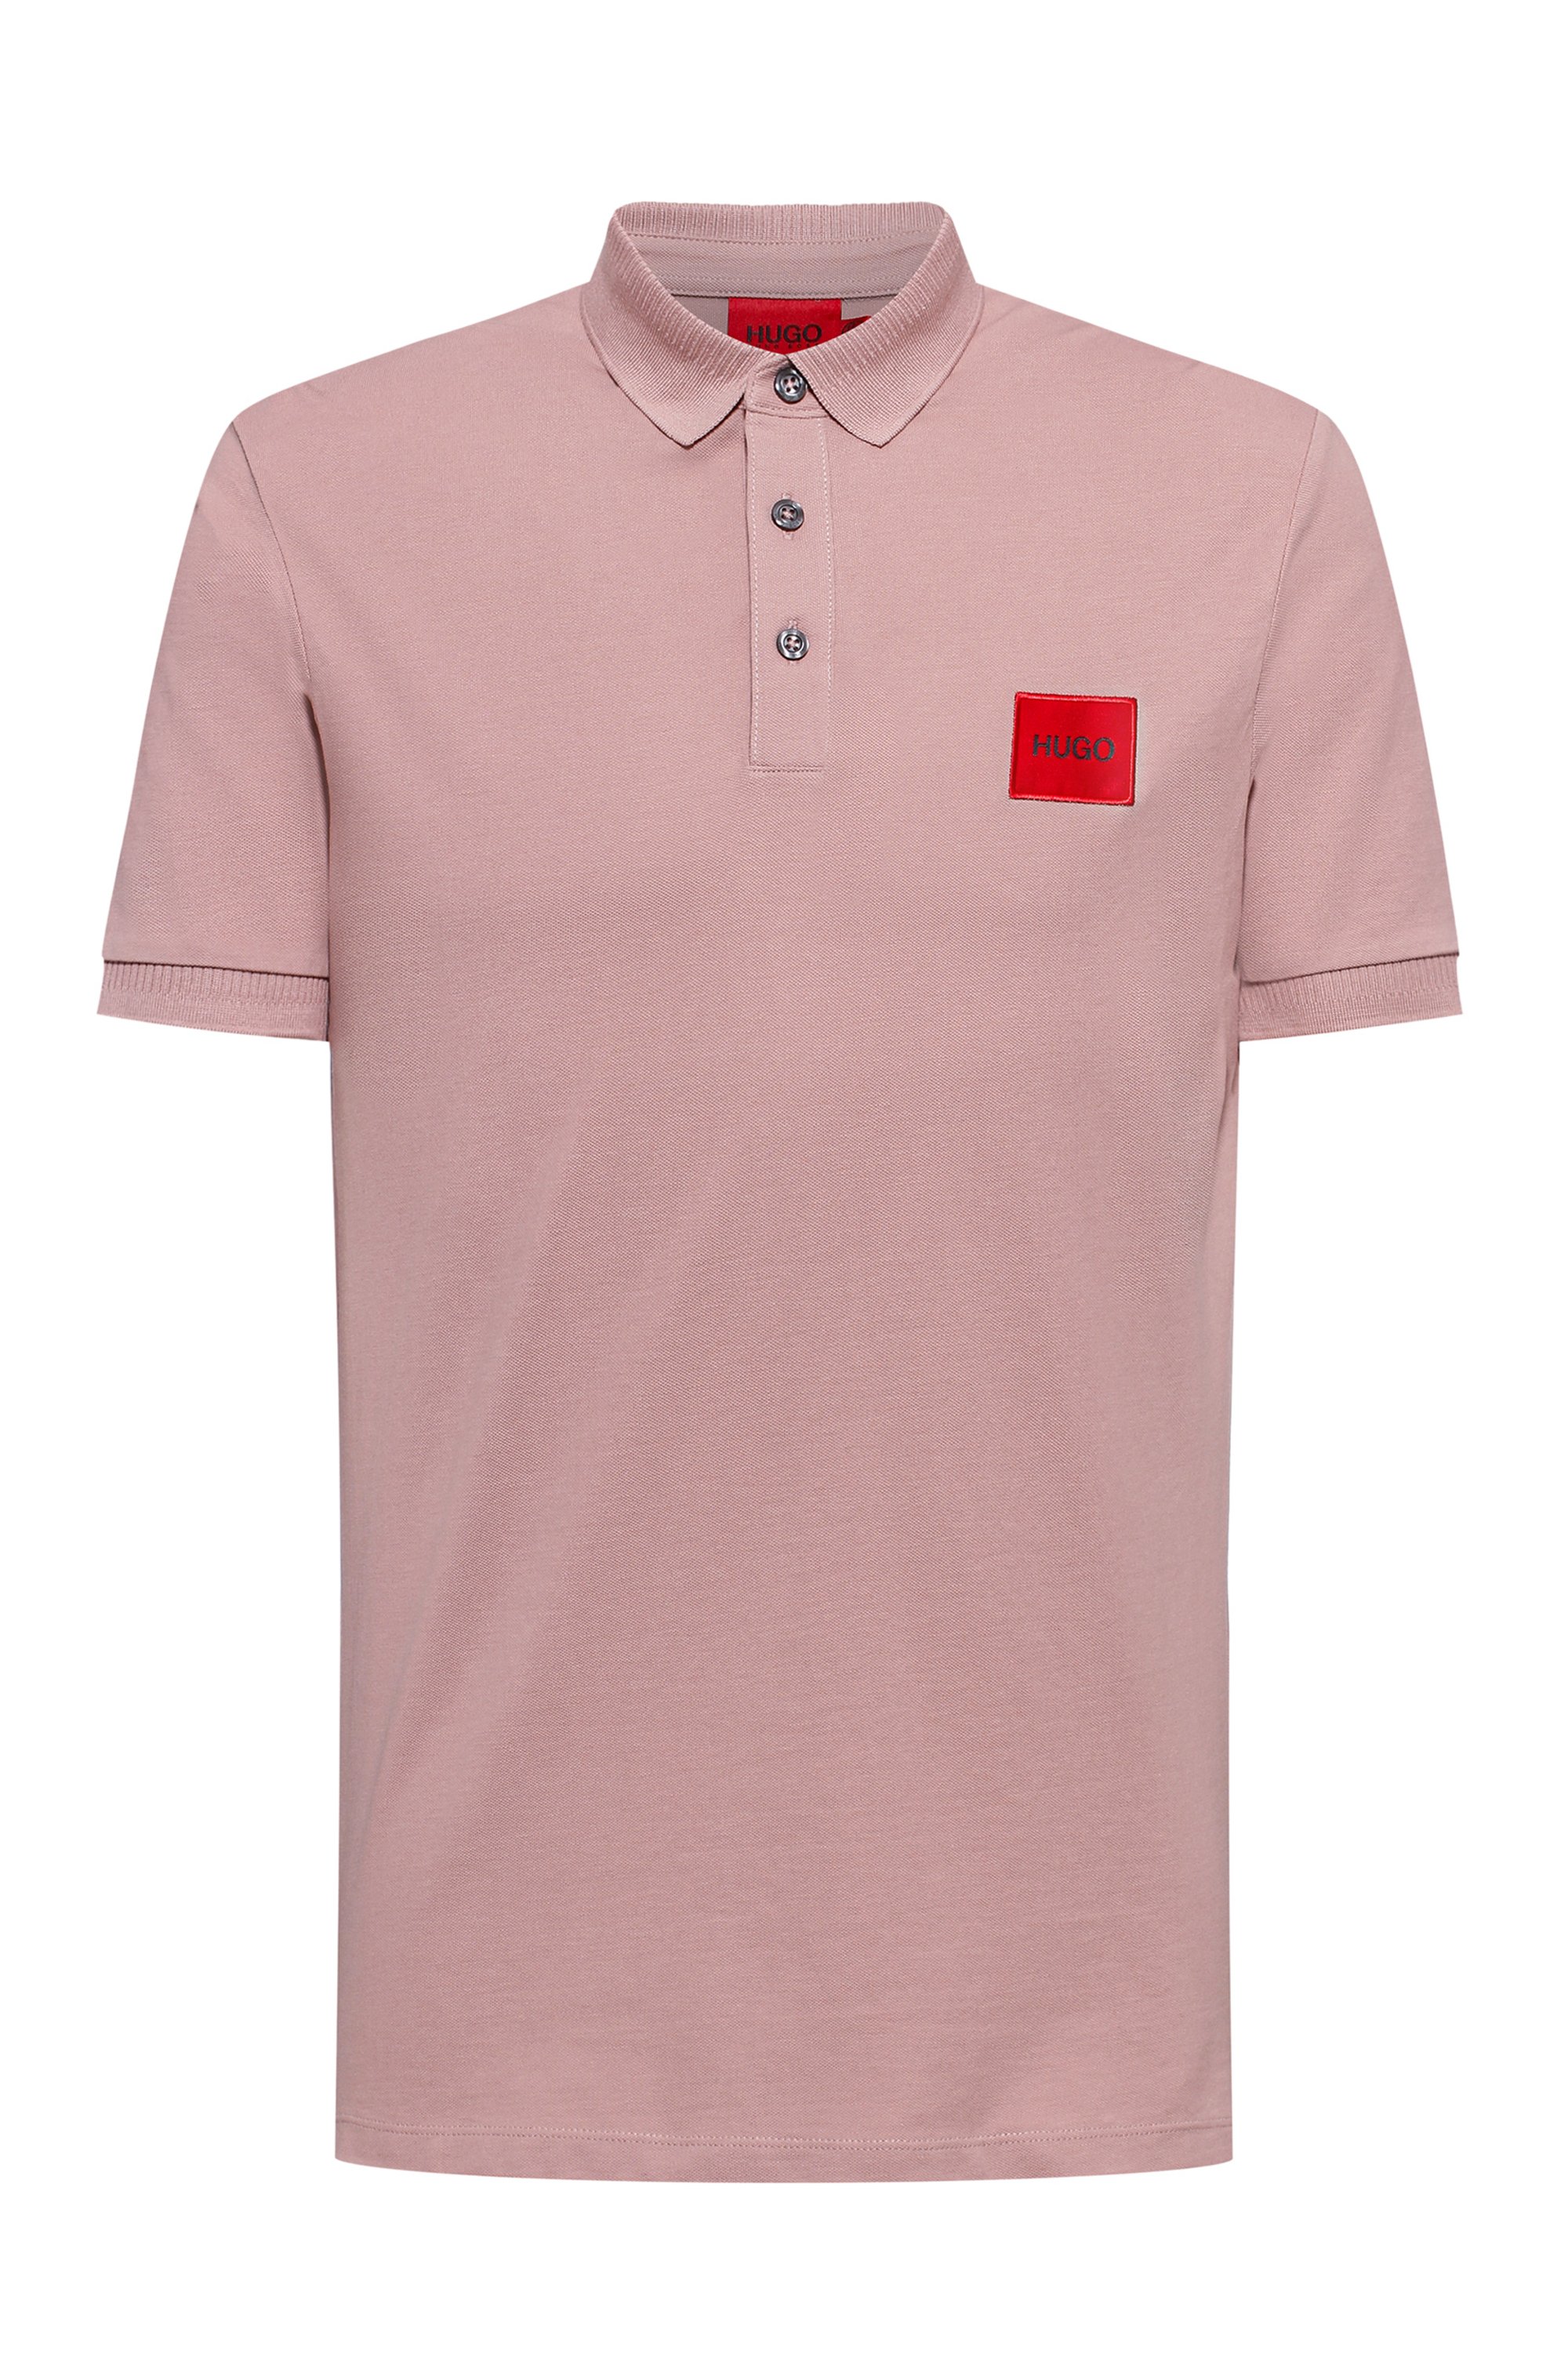 Slim-fit cotton-piqué polo shirt with logo patch, light pink